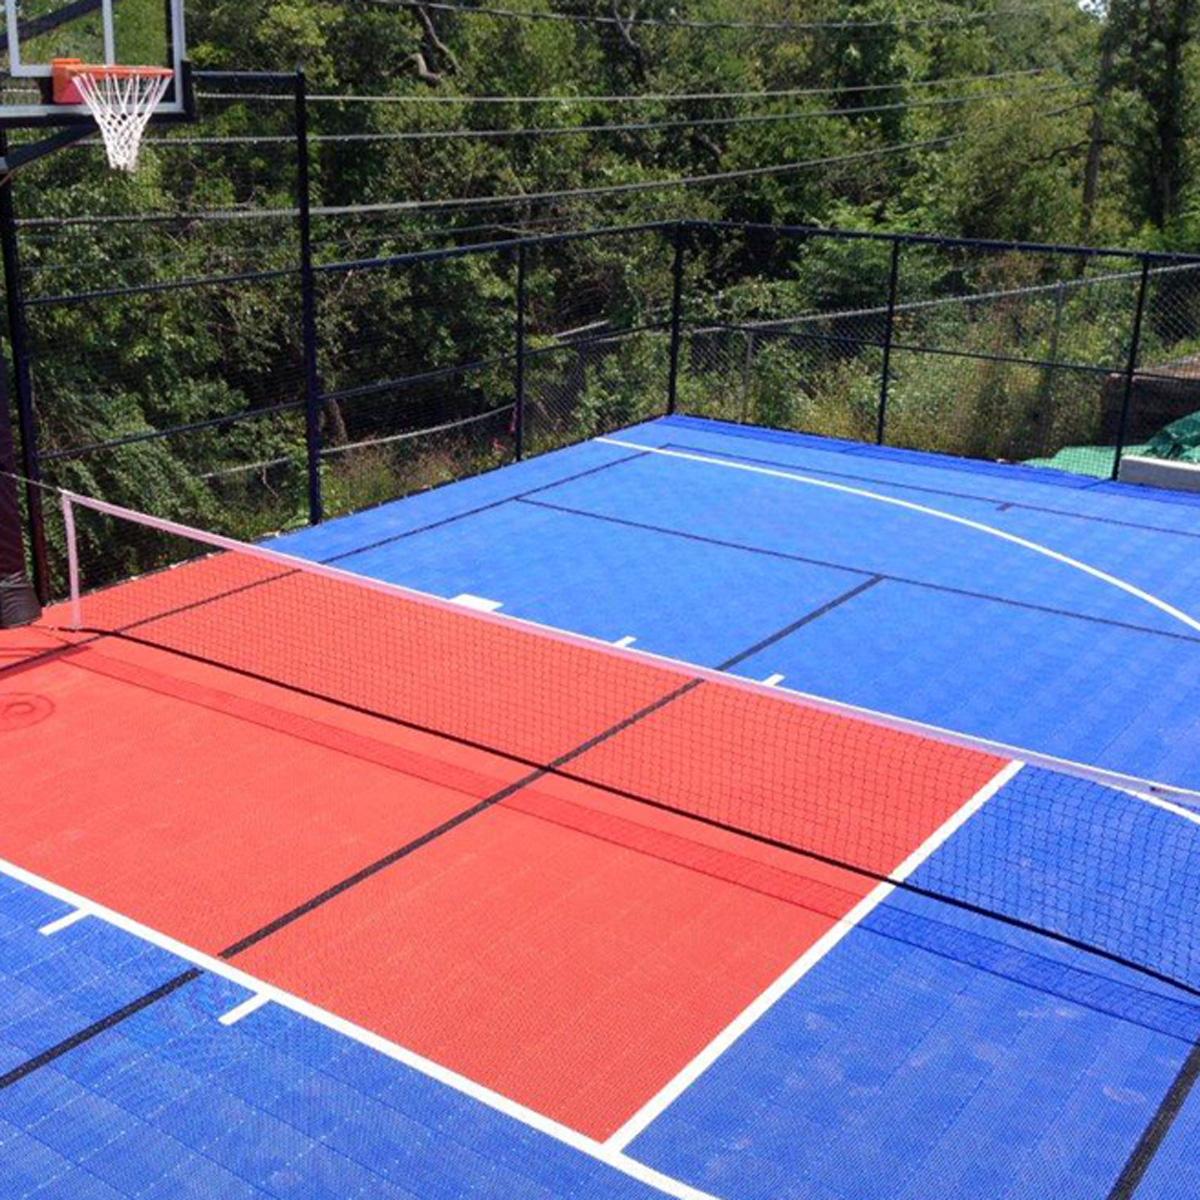 Backyard Basketball Courts, Build Outdoor Basketball Court Floor